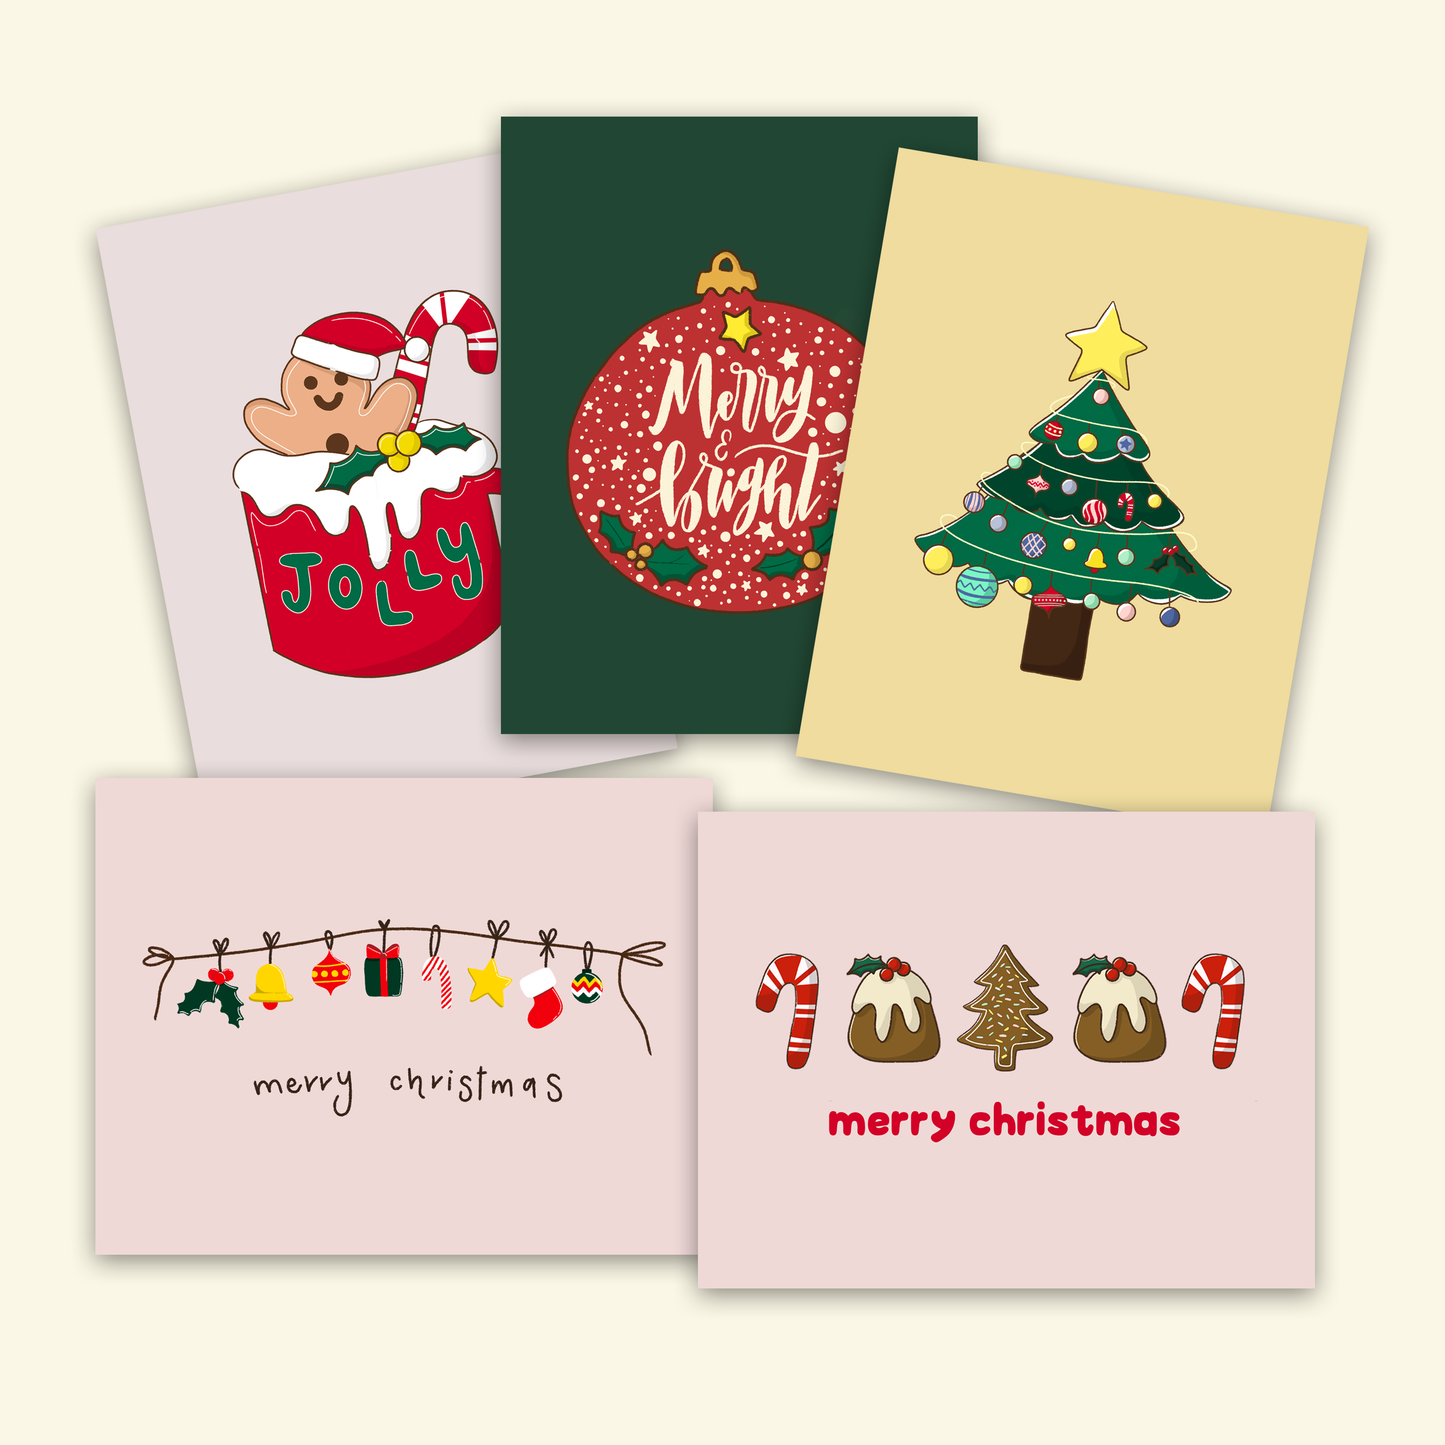 Stationery Lover's Bundle | Christmas gifting set ($80 value)